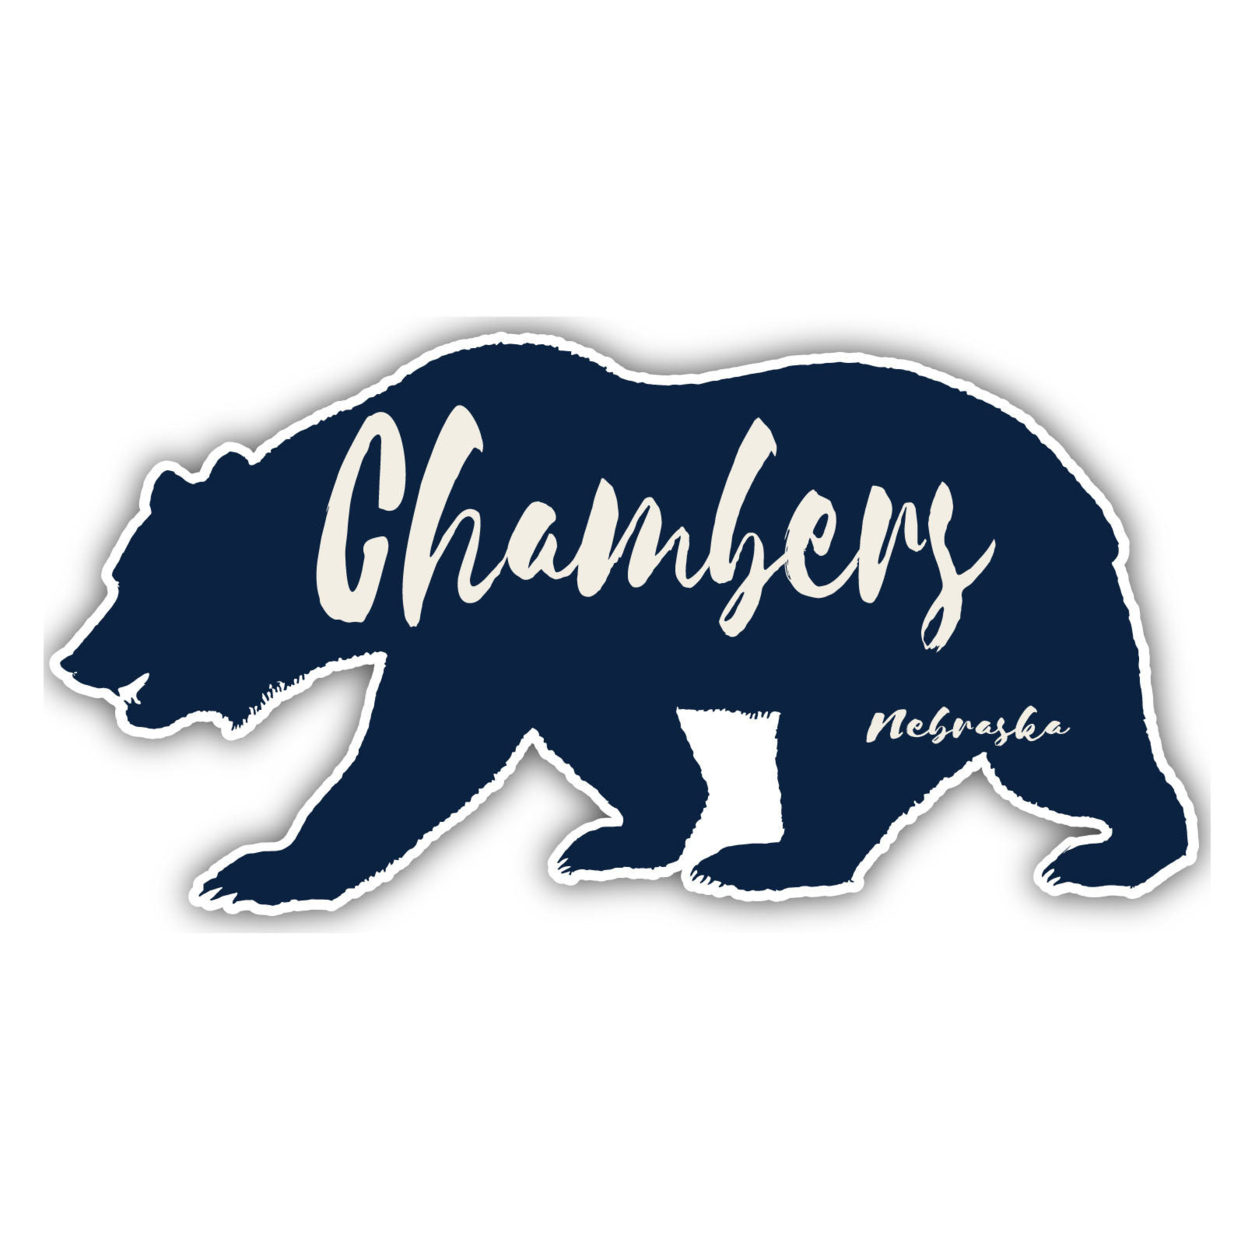 Chambers Nebraska Souvenir Decorative Stickers (Choose Theme And Size) - Single Unit, 8-Inch, Bear